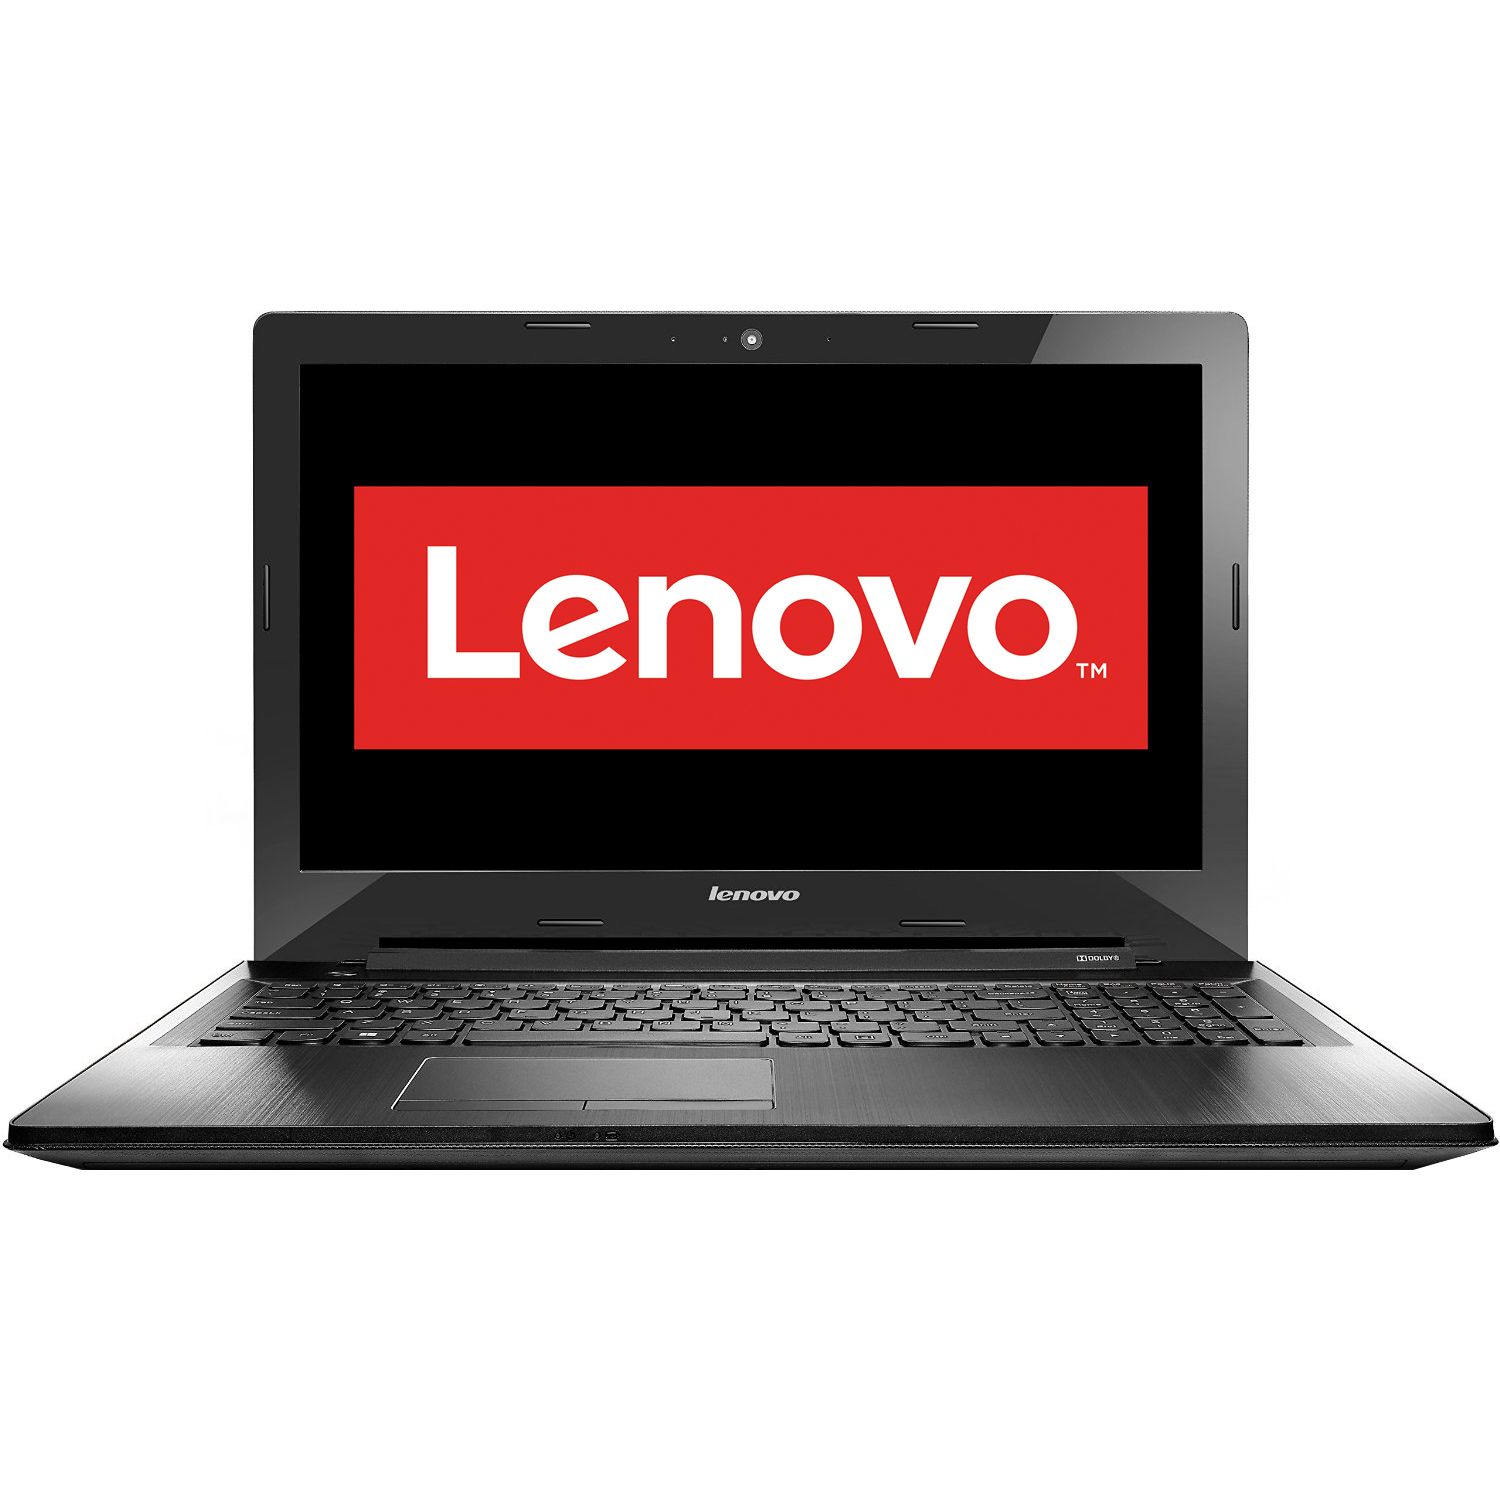  Laptop Lenovo G50-80, Intel Core i7-5500U, 8GB DDR3, HDD 1TB, AMD Radeon R5-M330 2GB, Free DOS 